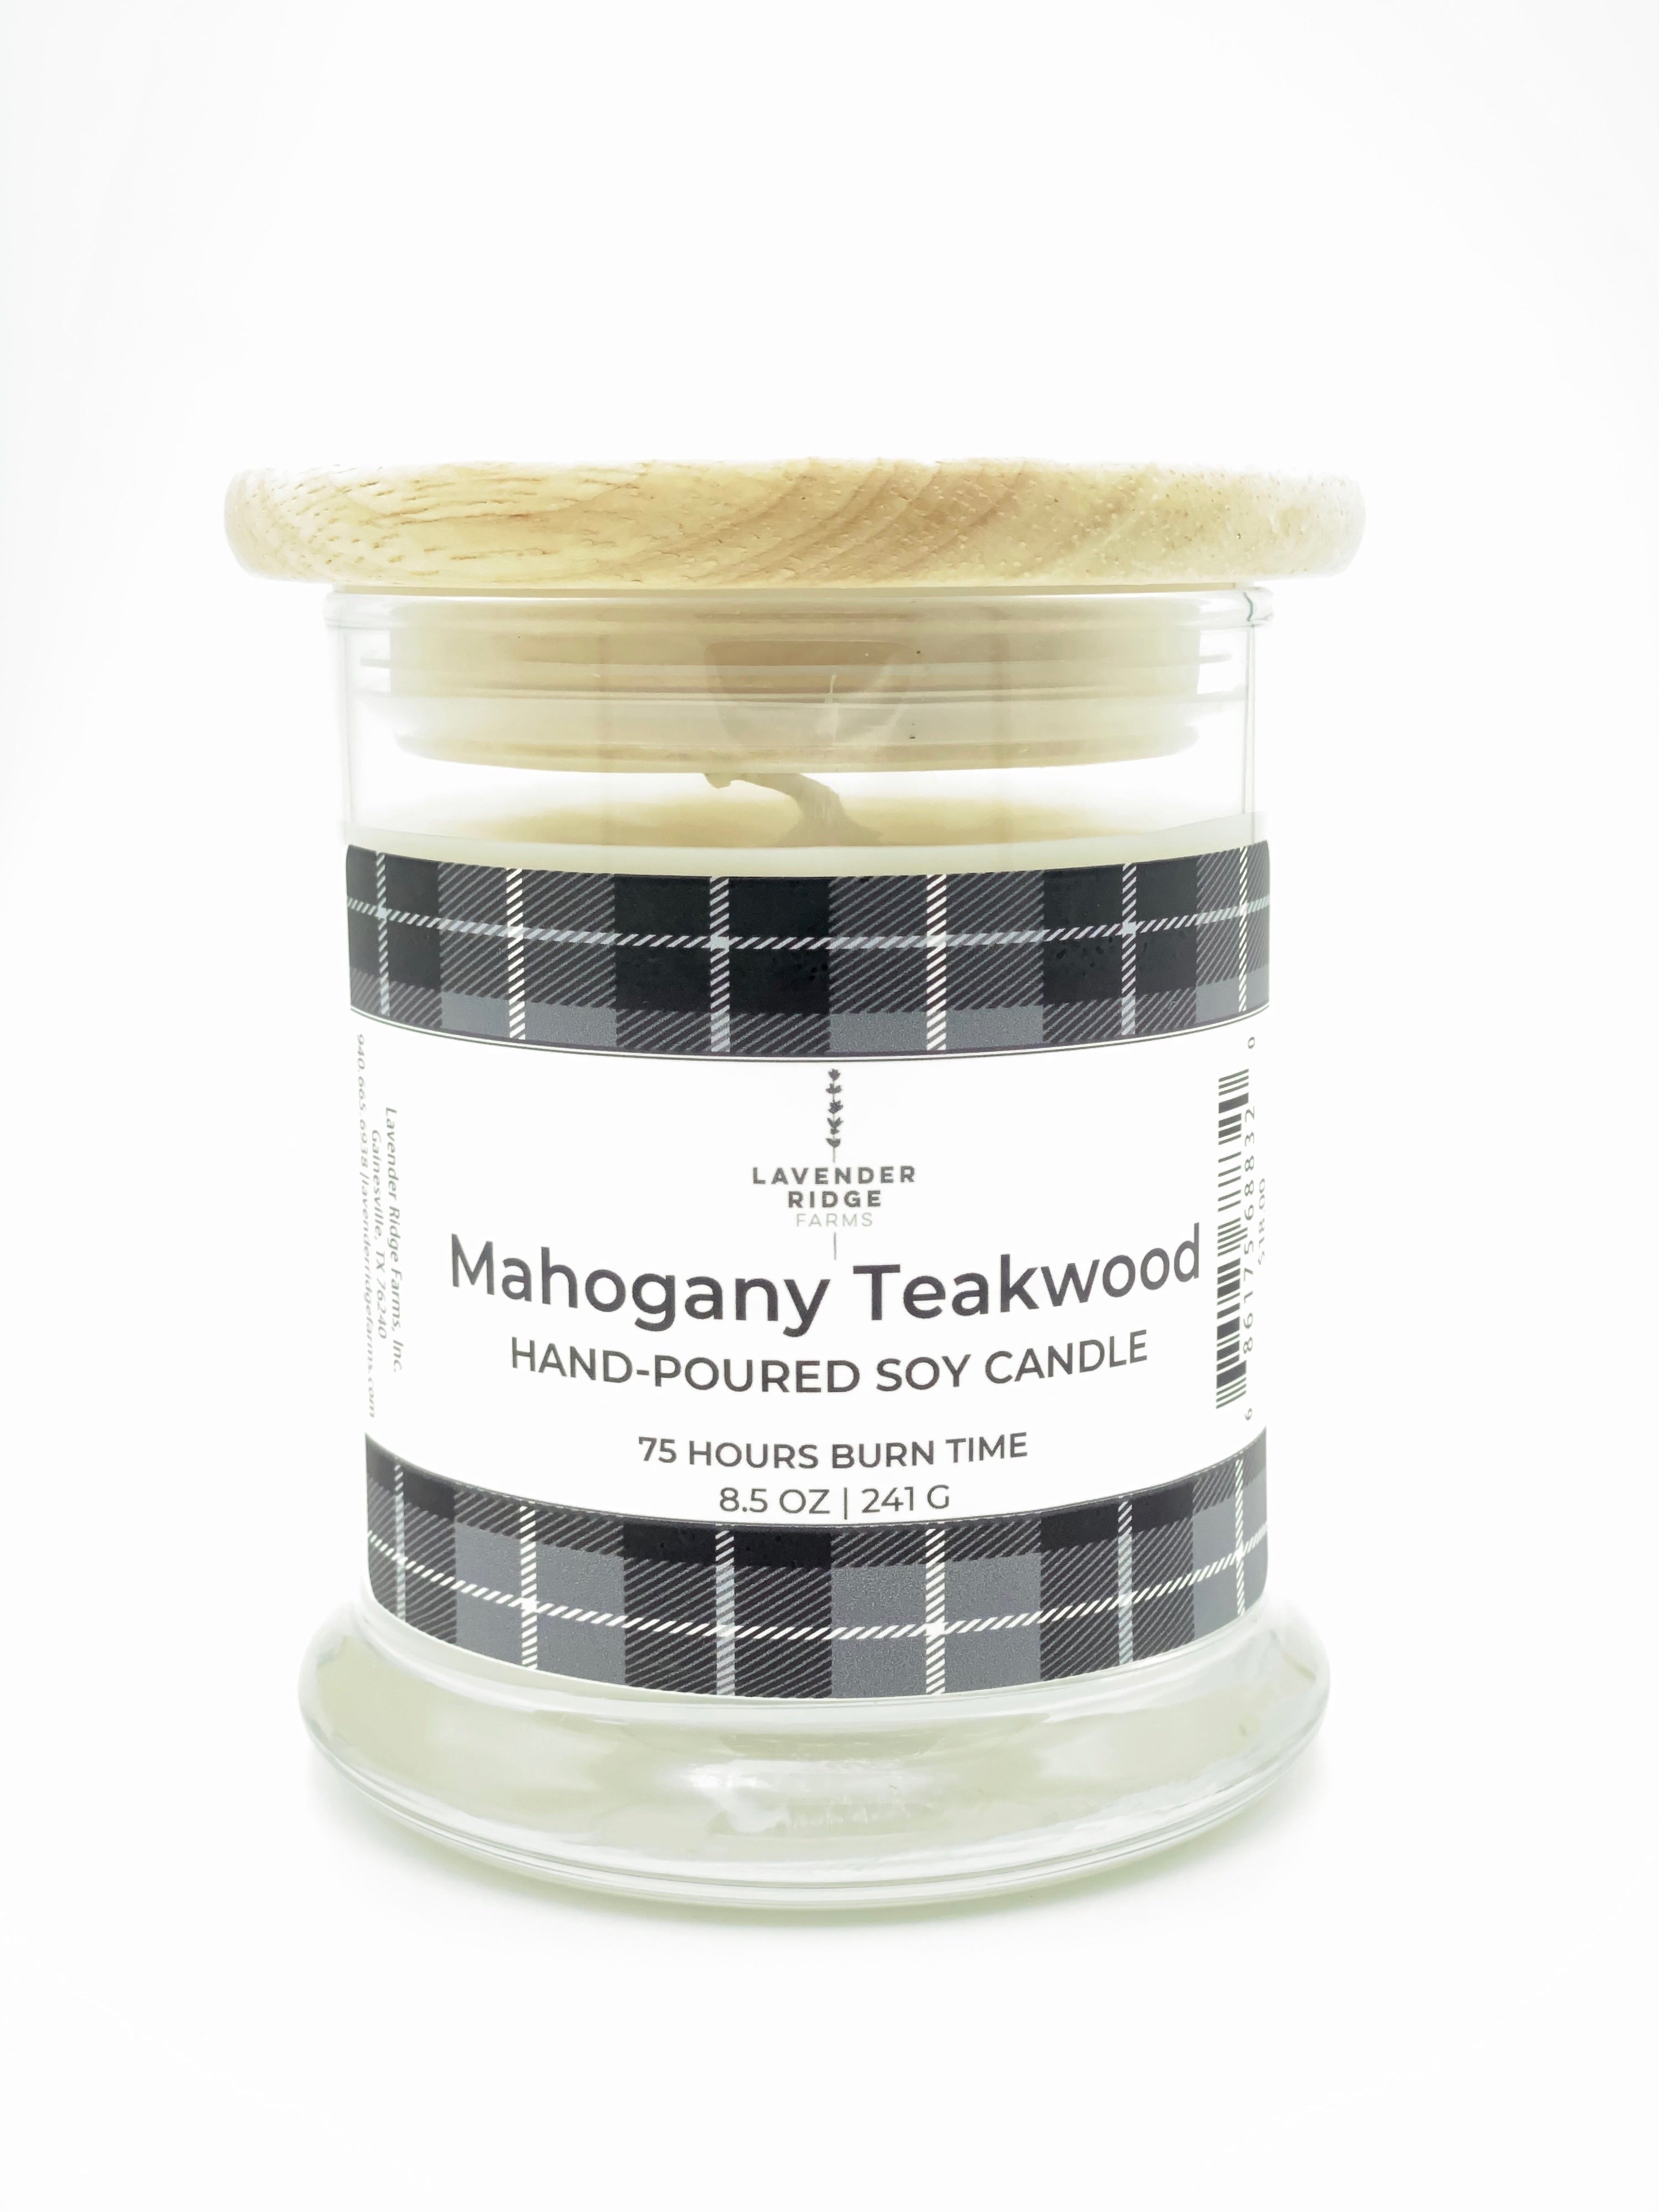  Gentlemens Teakwood Scented Wax Melts - Smells Like Mahogany -  Teakwood - Musk - 100% Naturally Vegan Soy and Premium Fragrance, Great  Gift